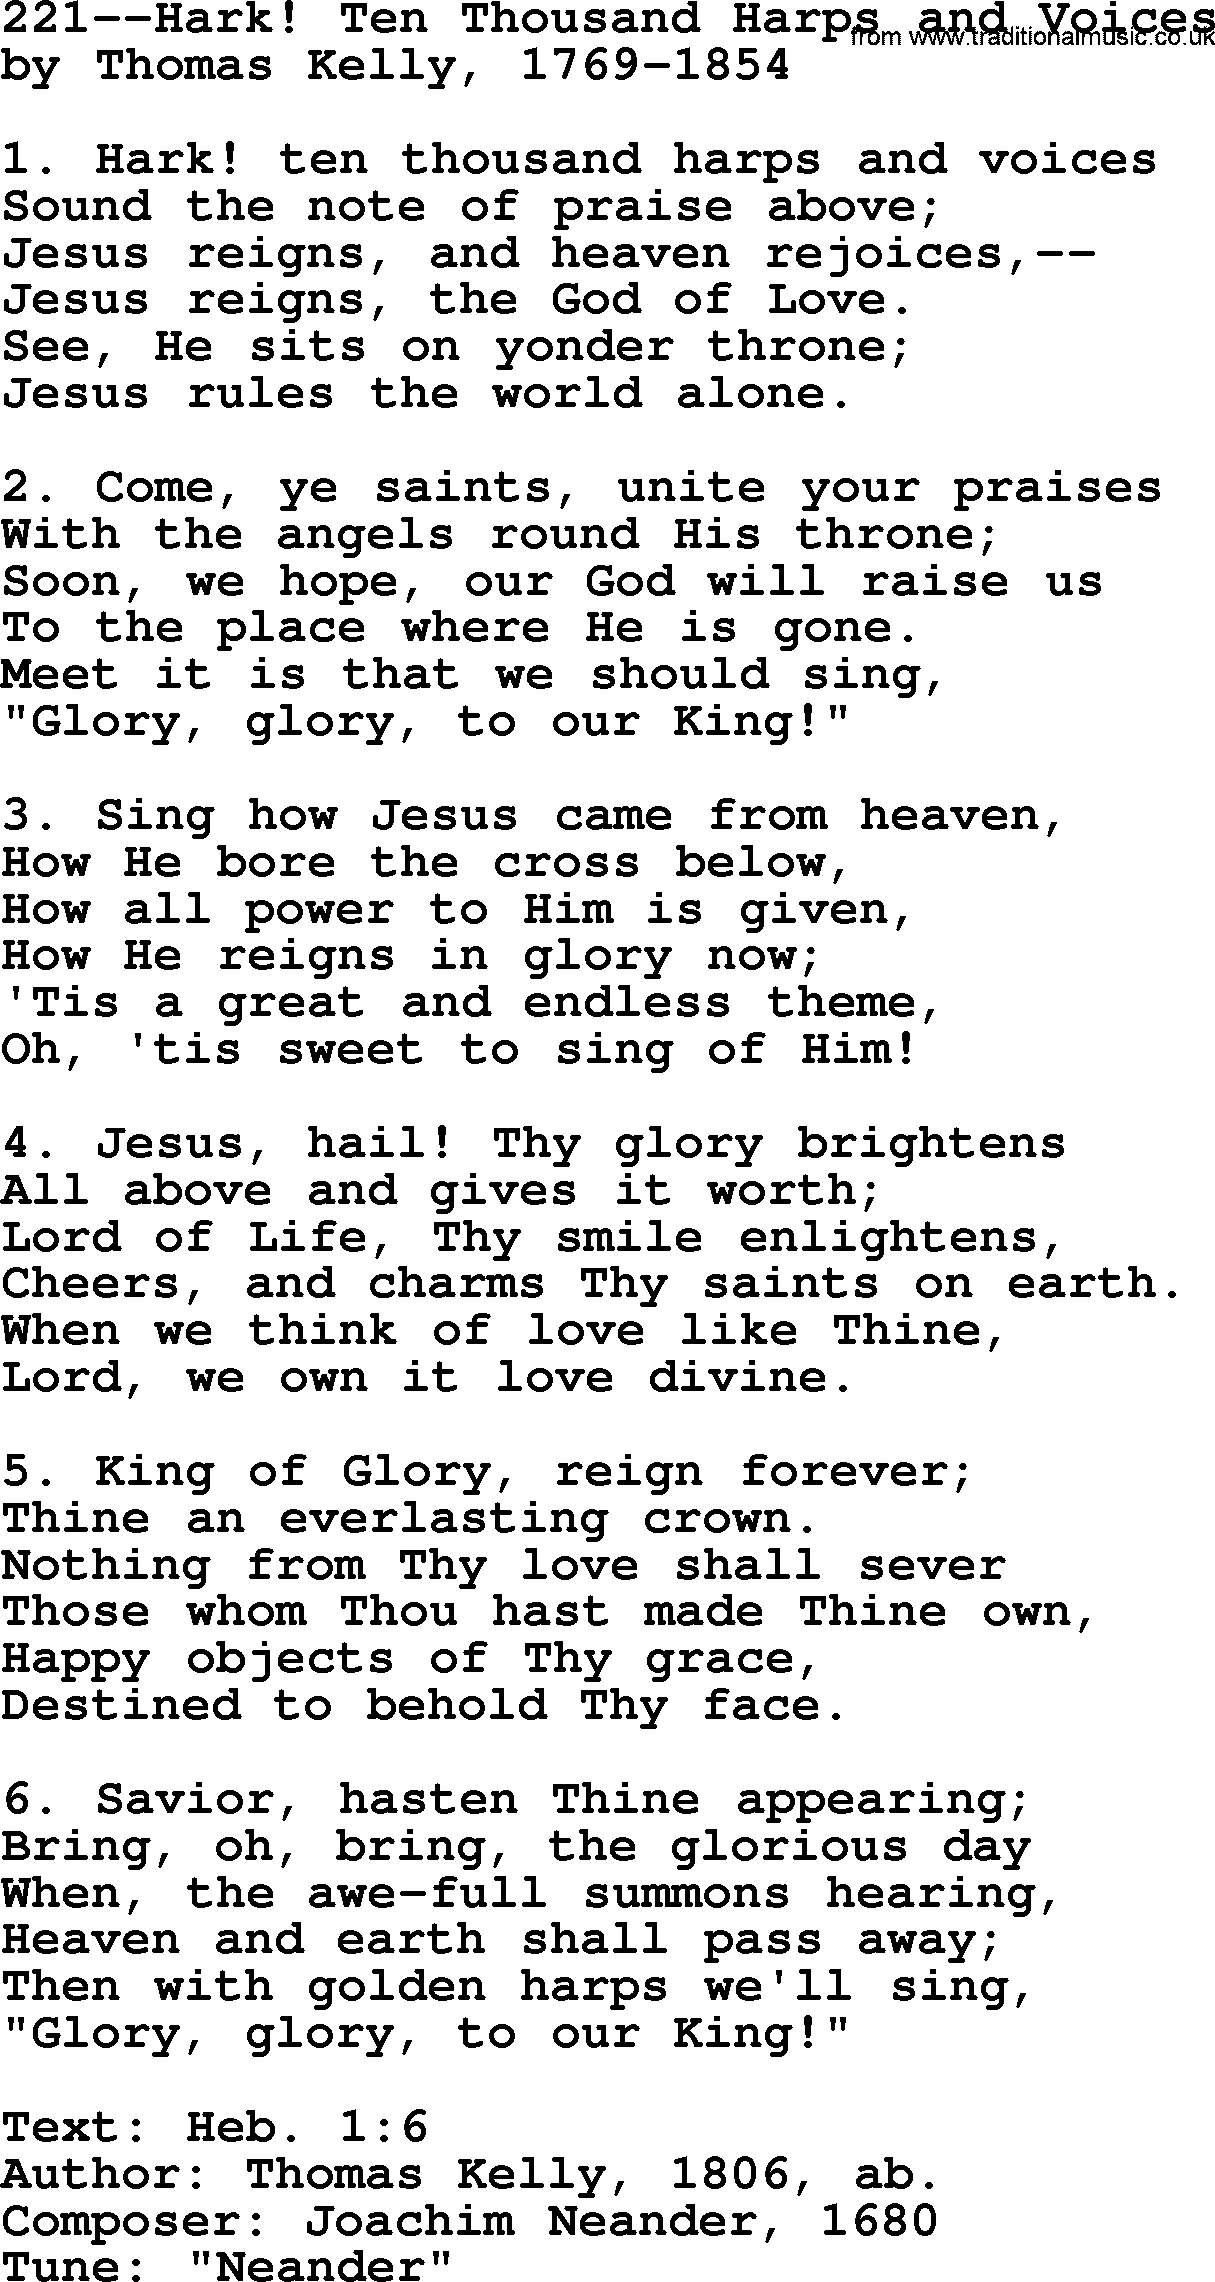 Lutheran Hymn: 221--Hark! Ten Thousand Harps and Voices.txt lyrics with PDF